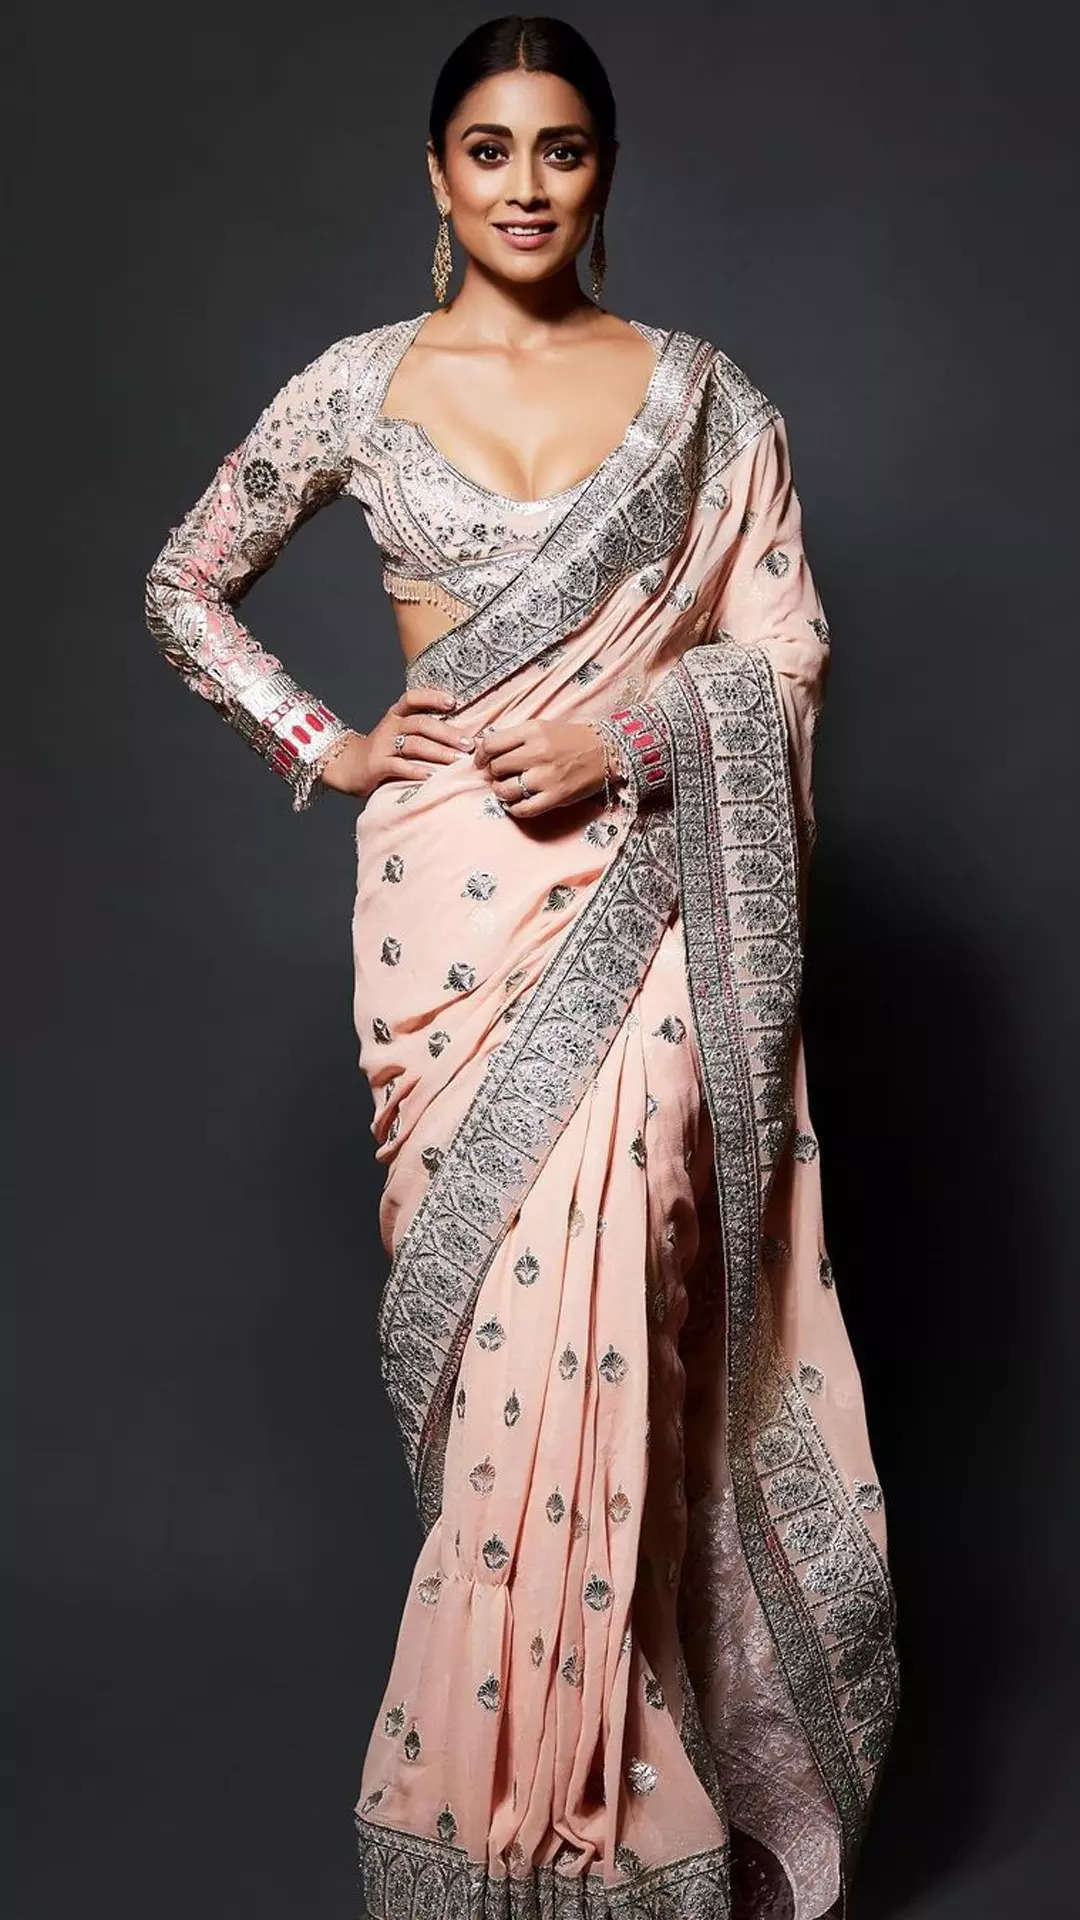 Shriya Saran gives us ethnic inspiration in Indo-Western blouse